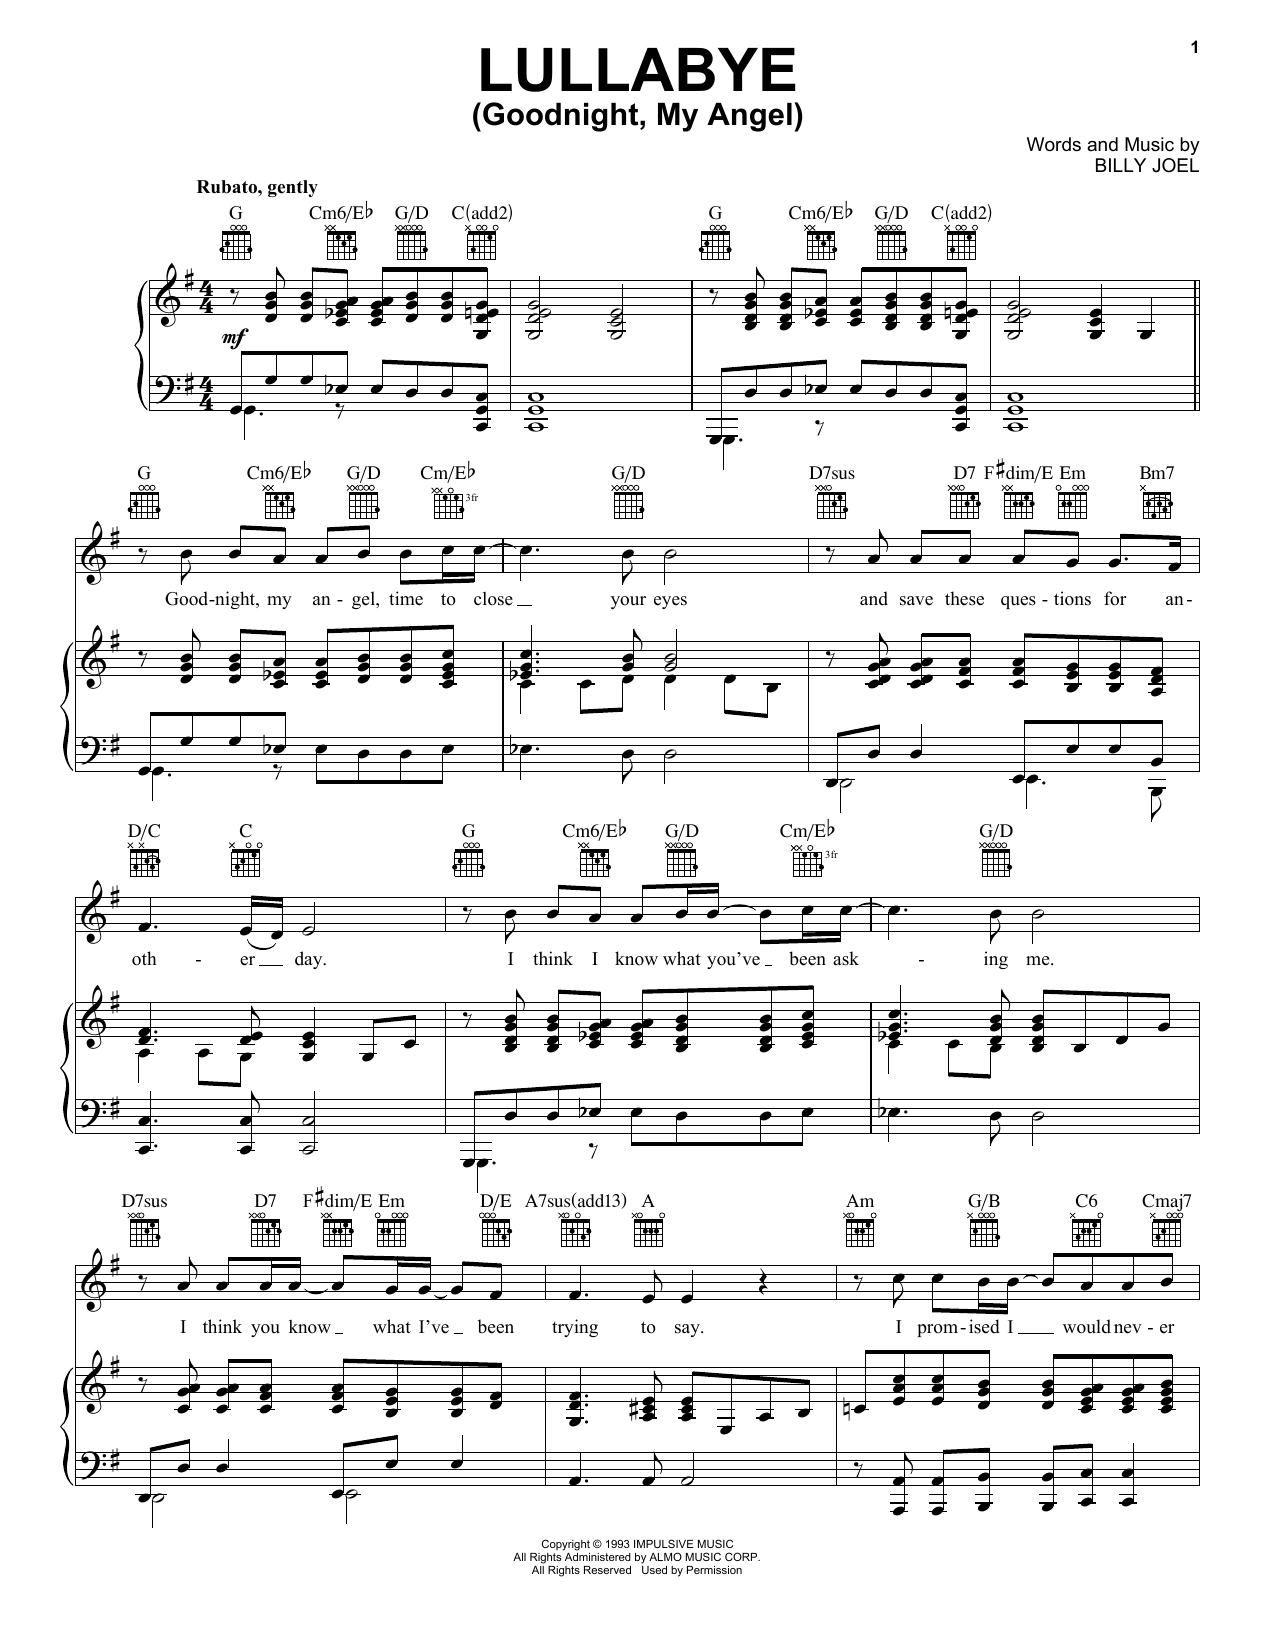 Billy Joel Lullabye (Goodnight, My Angel) Sheet Music Notes & Chords for Ukulele - Download or Print PDF